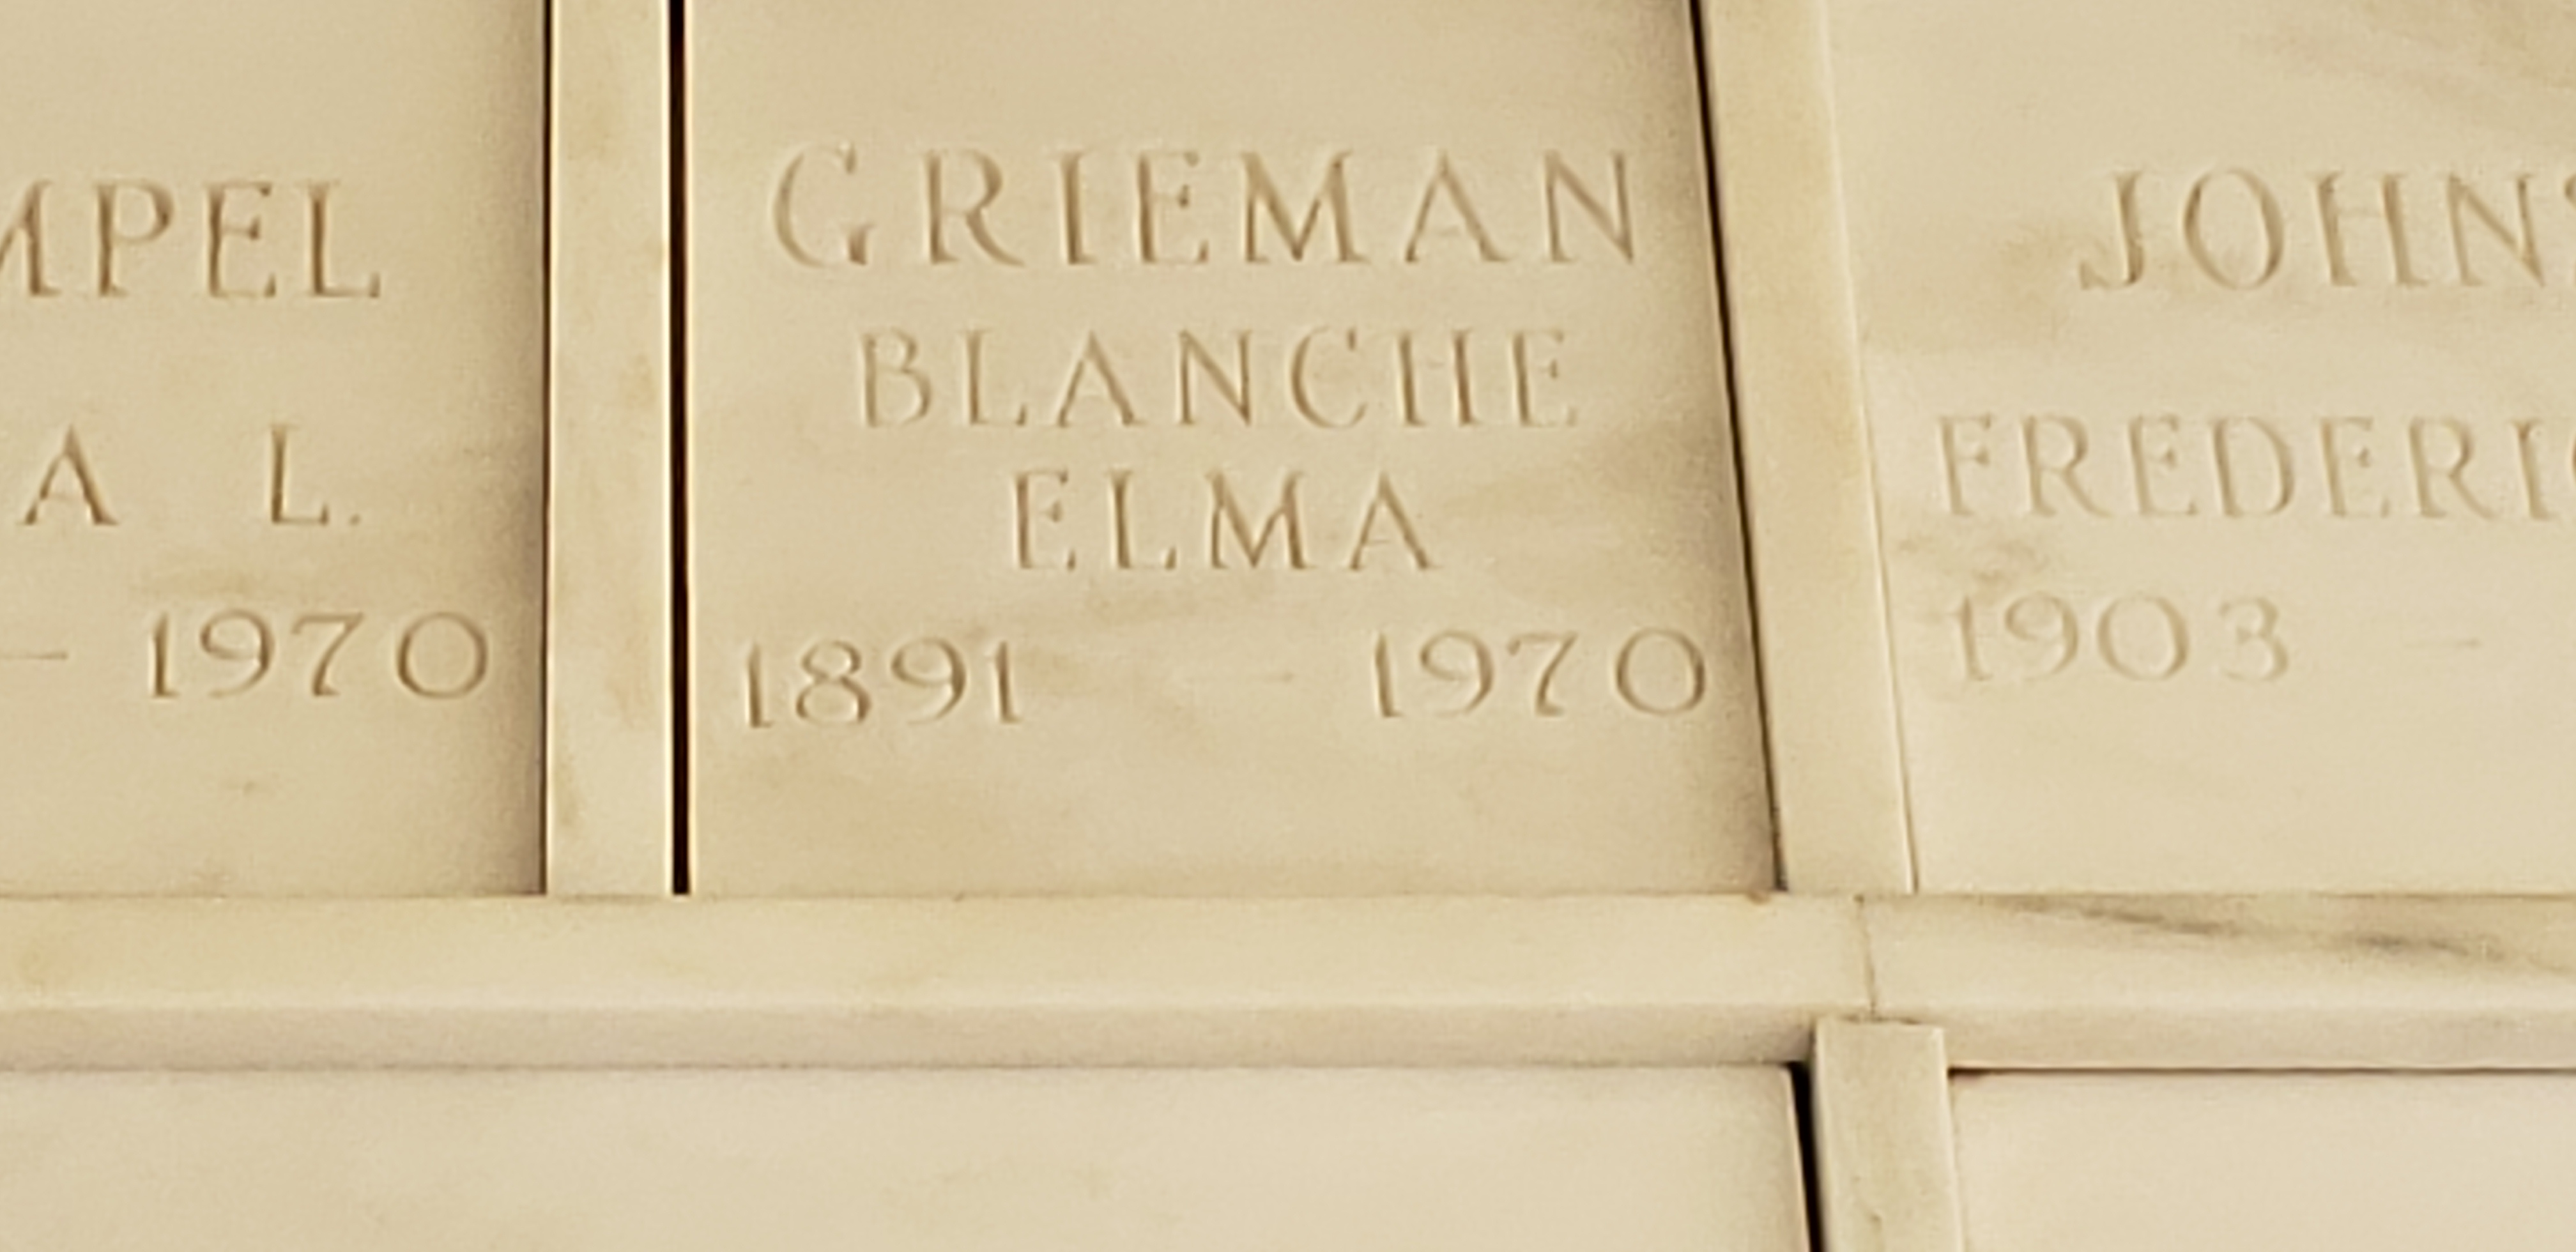 Elma Blanche Grieman